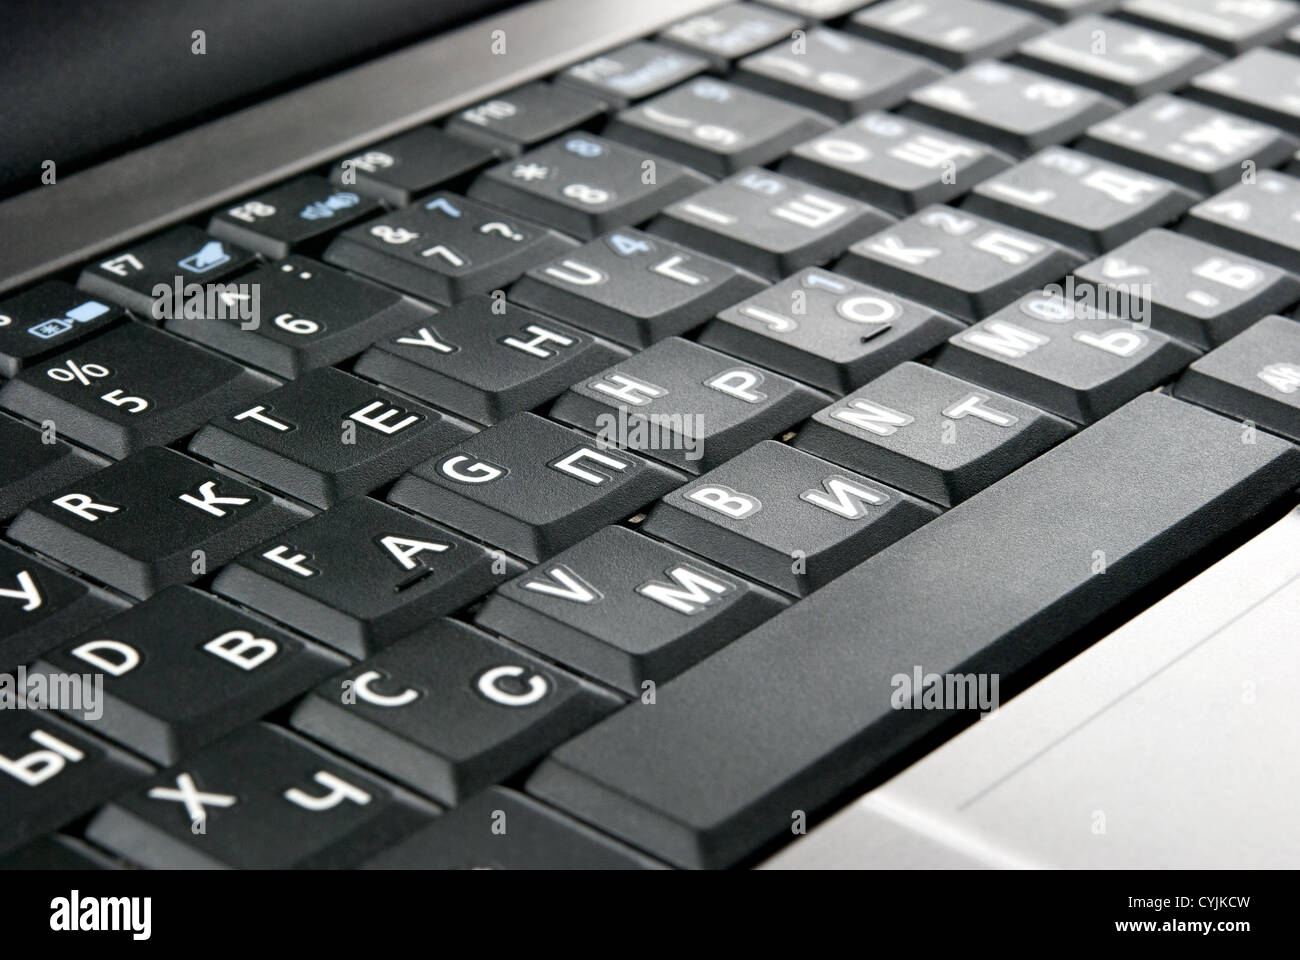 Tastiera portatile closeup. Vista obliqua Foto Stock